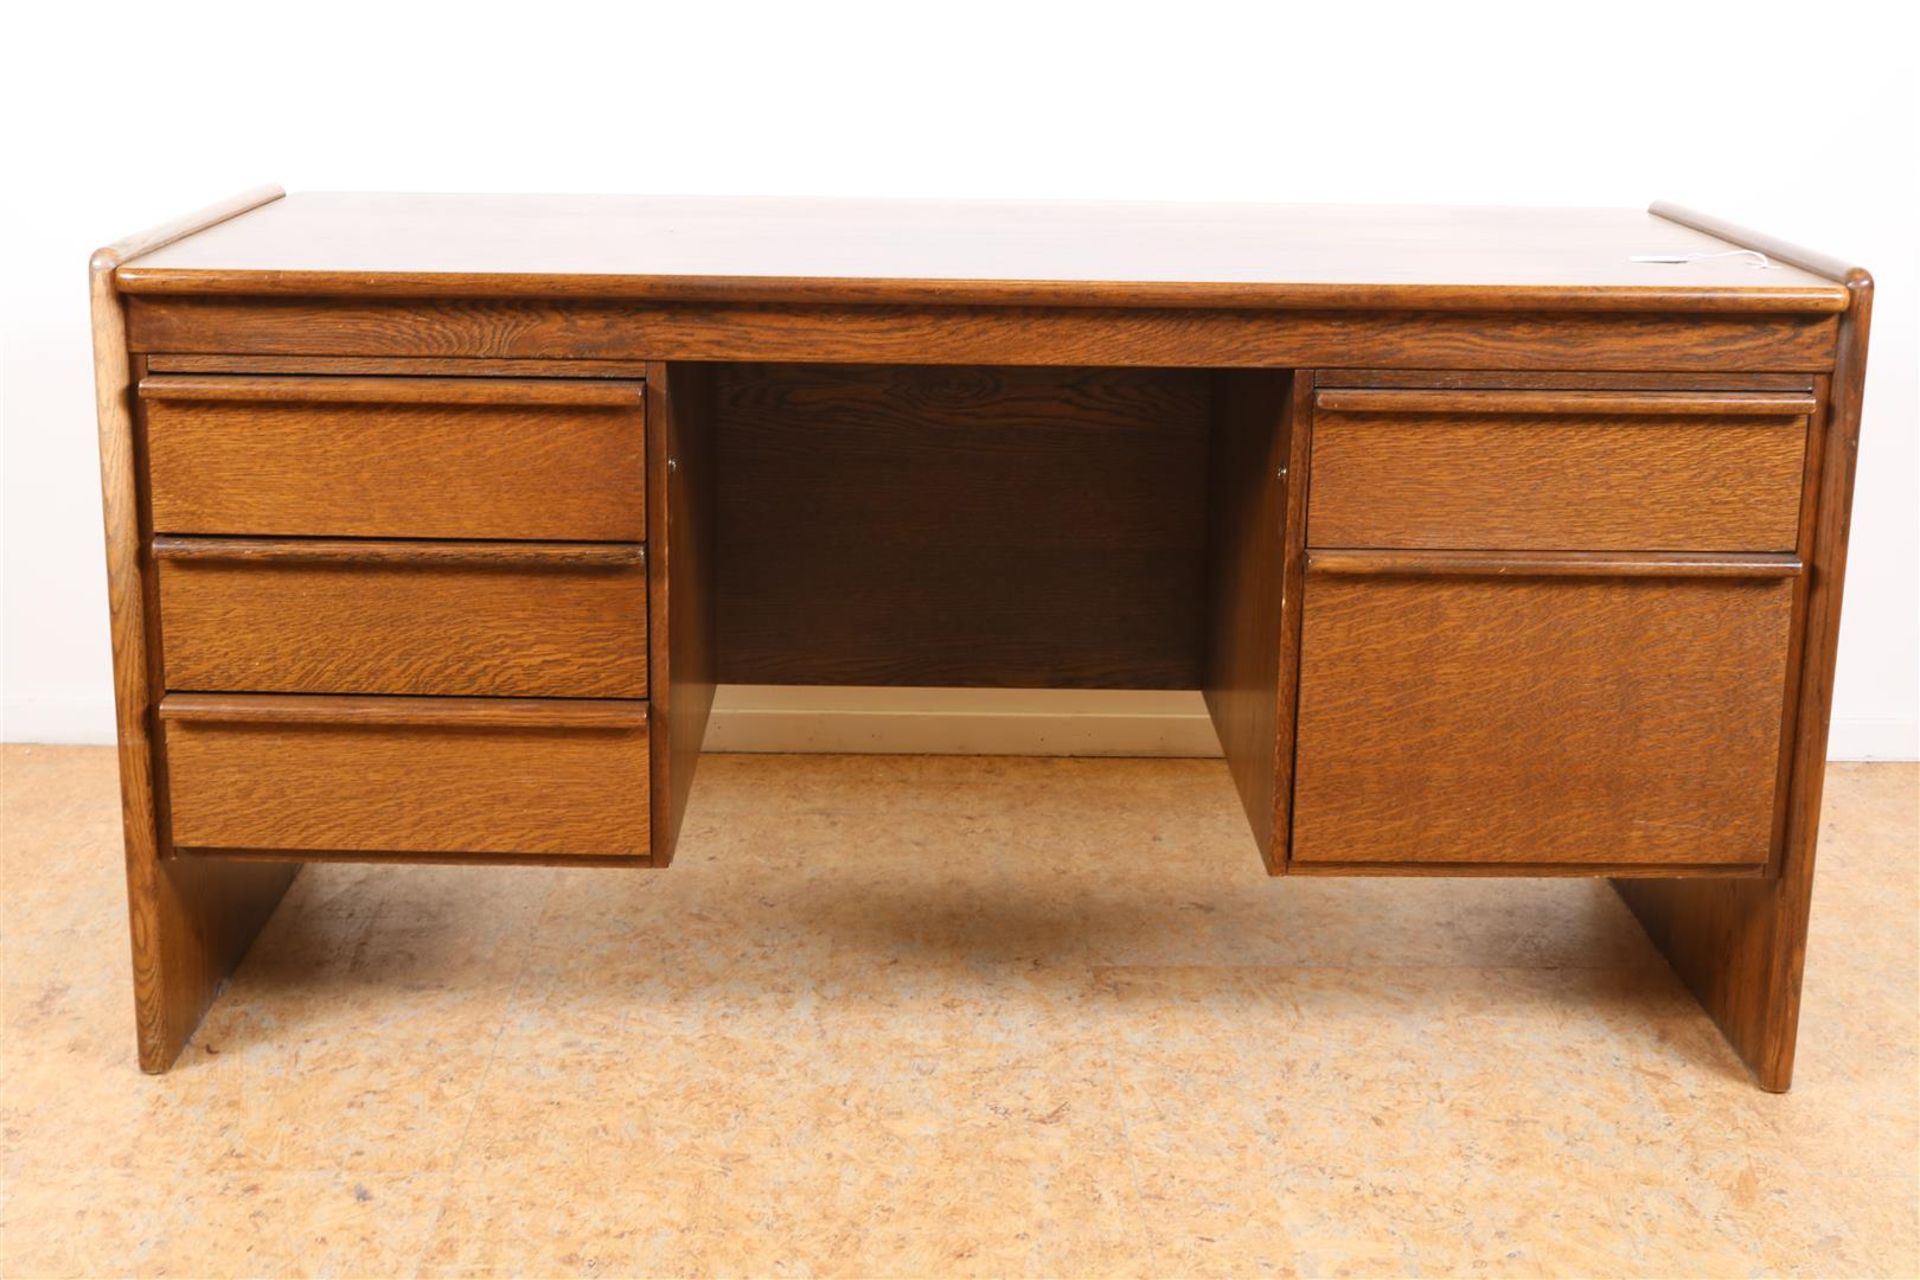 Veneered oak vintage desk with 5 drawers, 1970s, h. 77, bro. 176, d. 75 cm. (no key available)